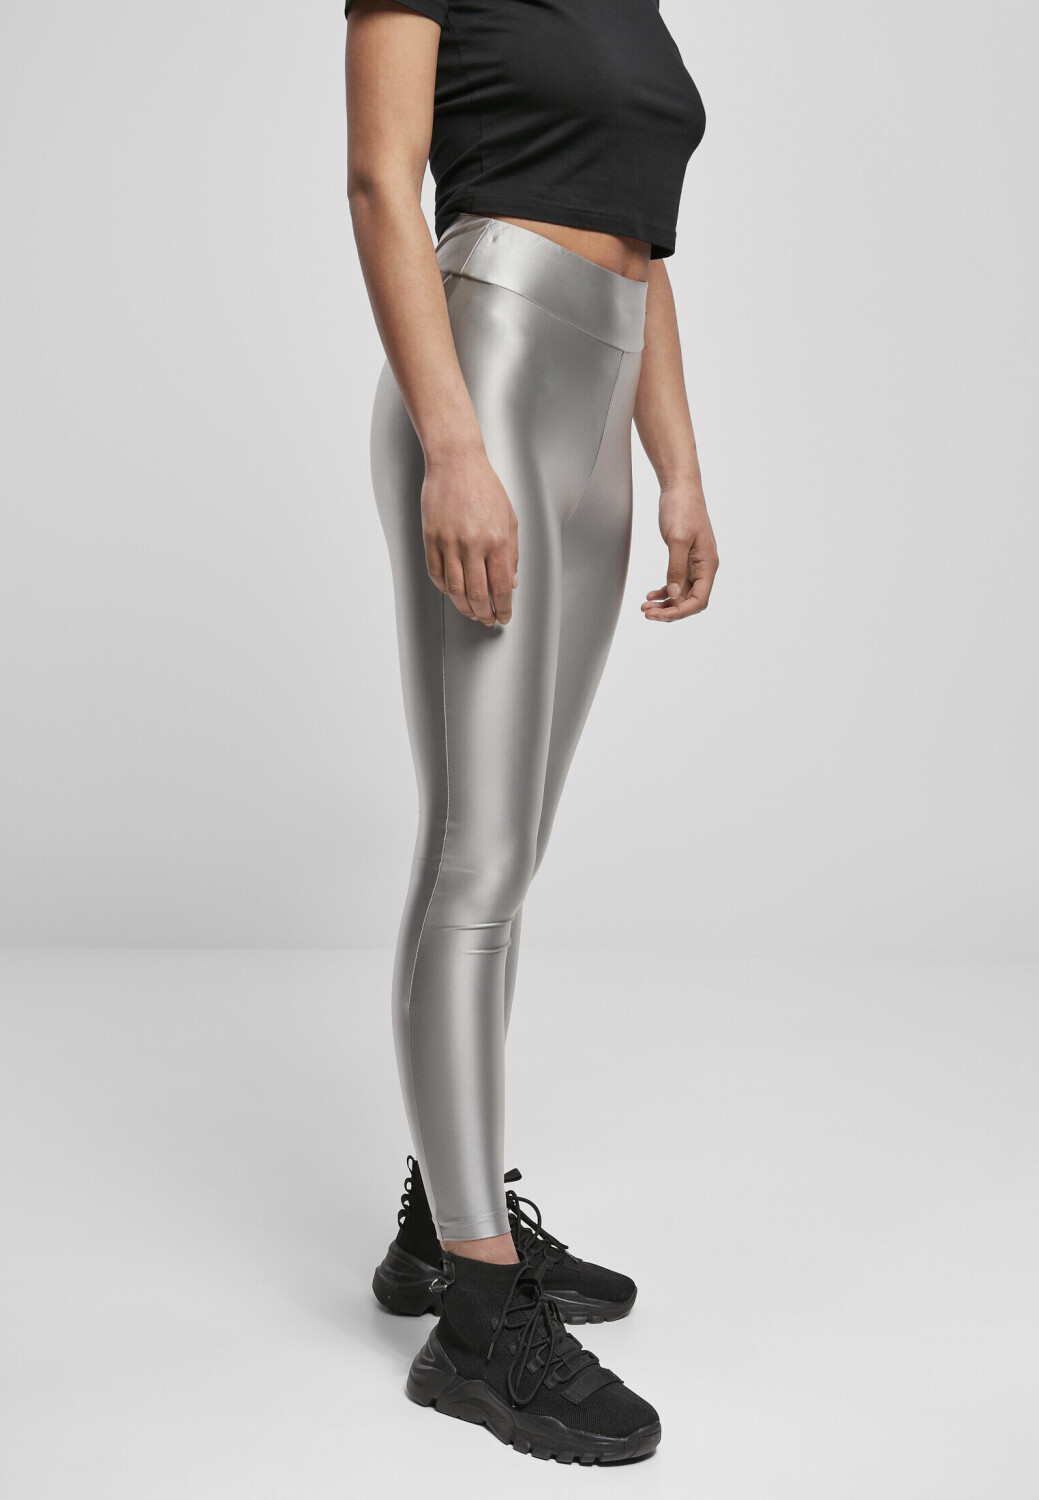 Urban Classics Ladies Highwaist Shiny Metalic Leggings (TB4344-03158-0039)  darksilver ab 22,72 € | Preisvergleich bei